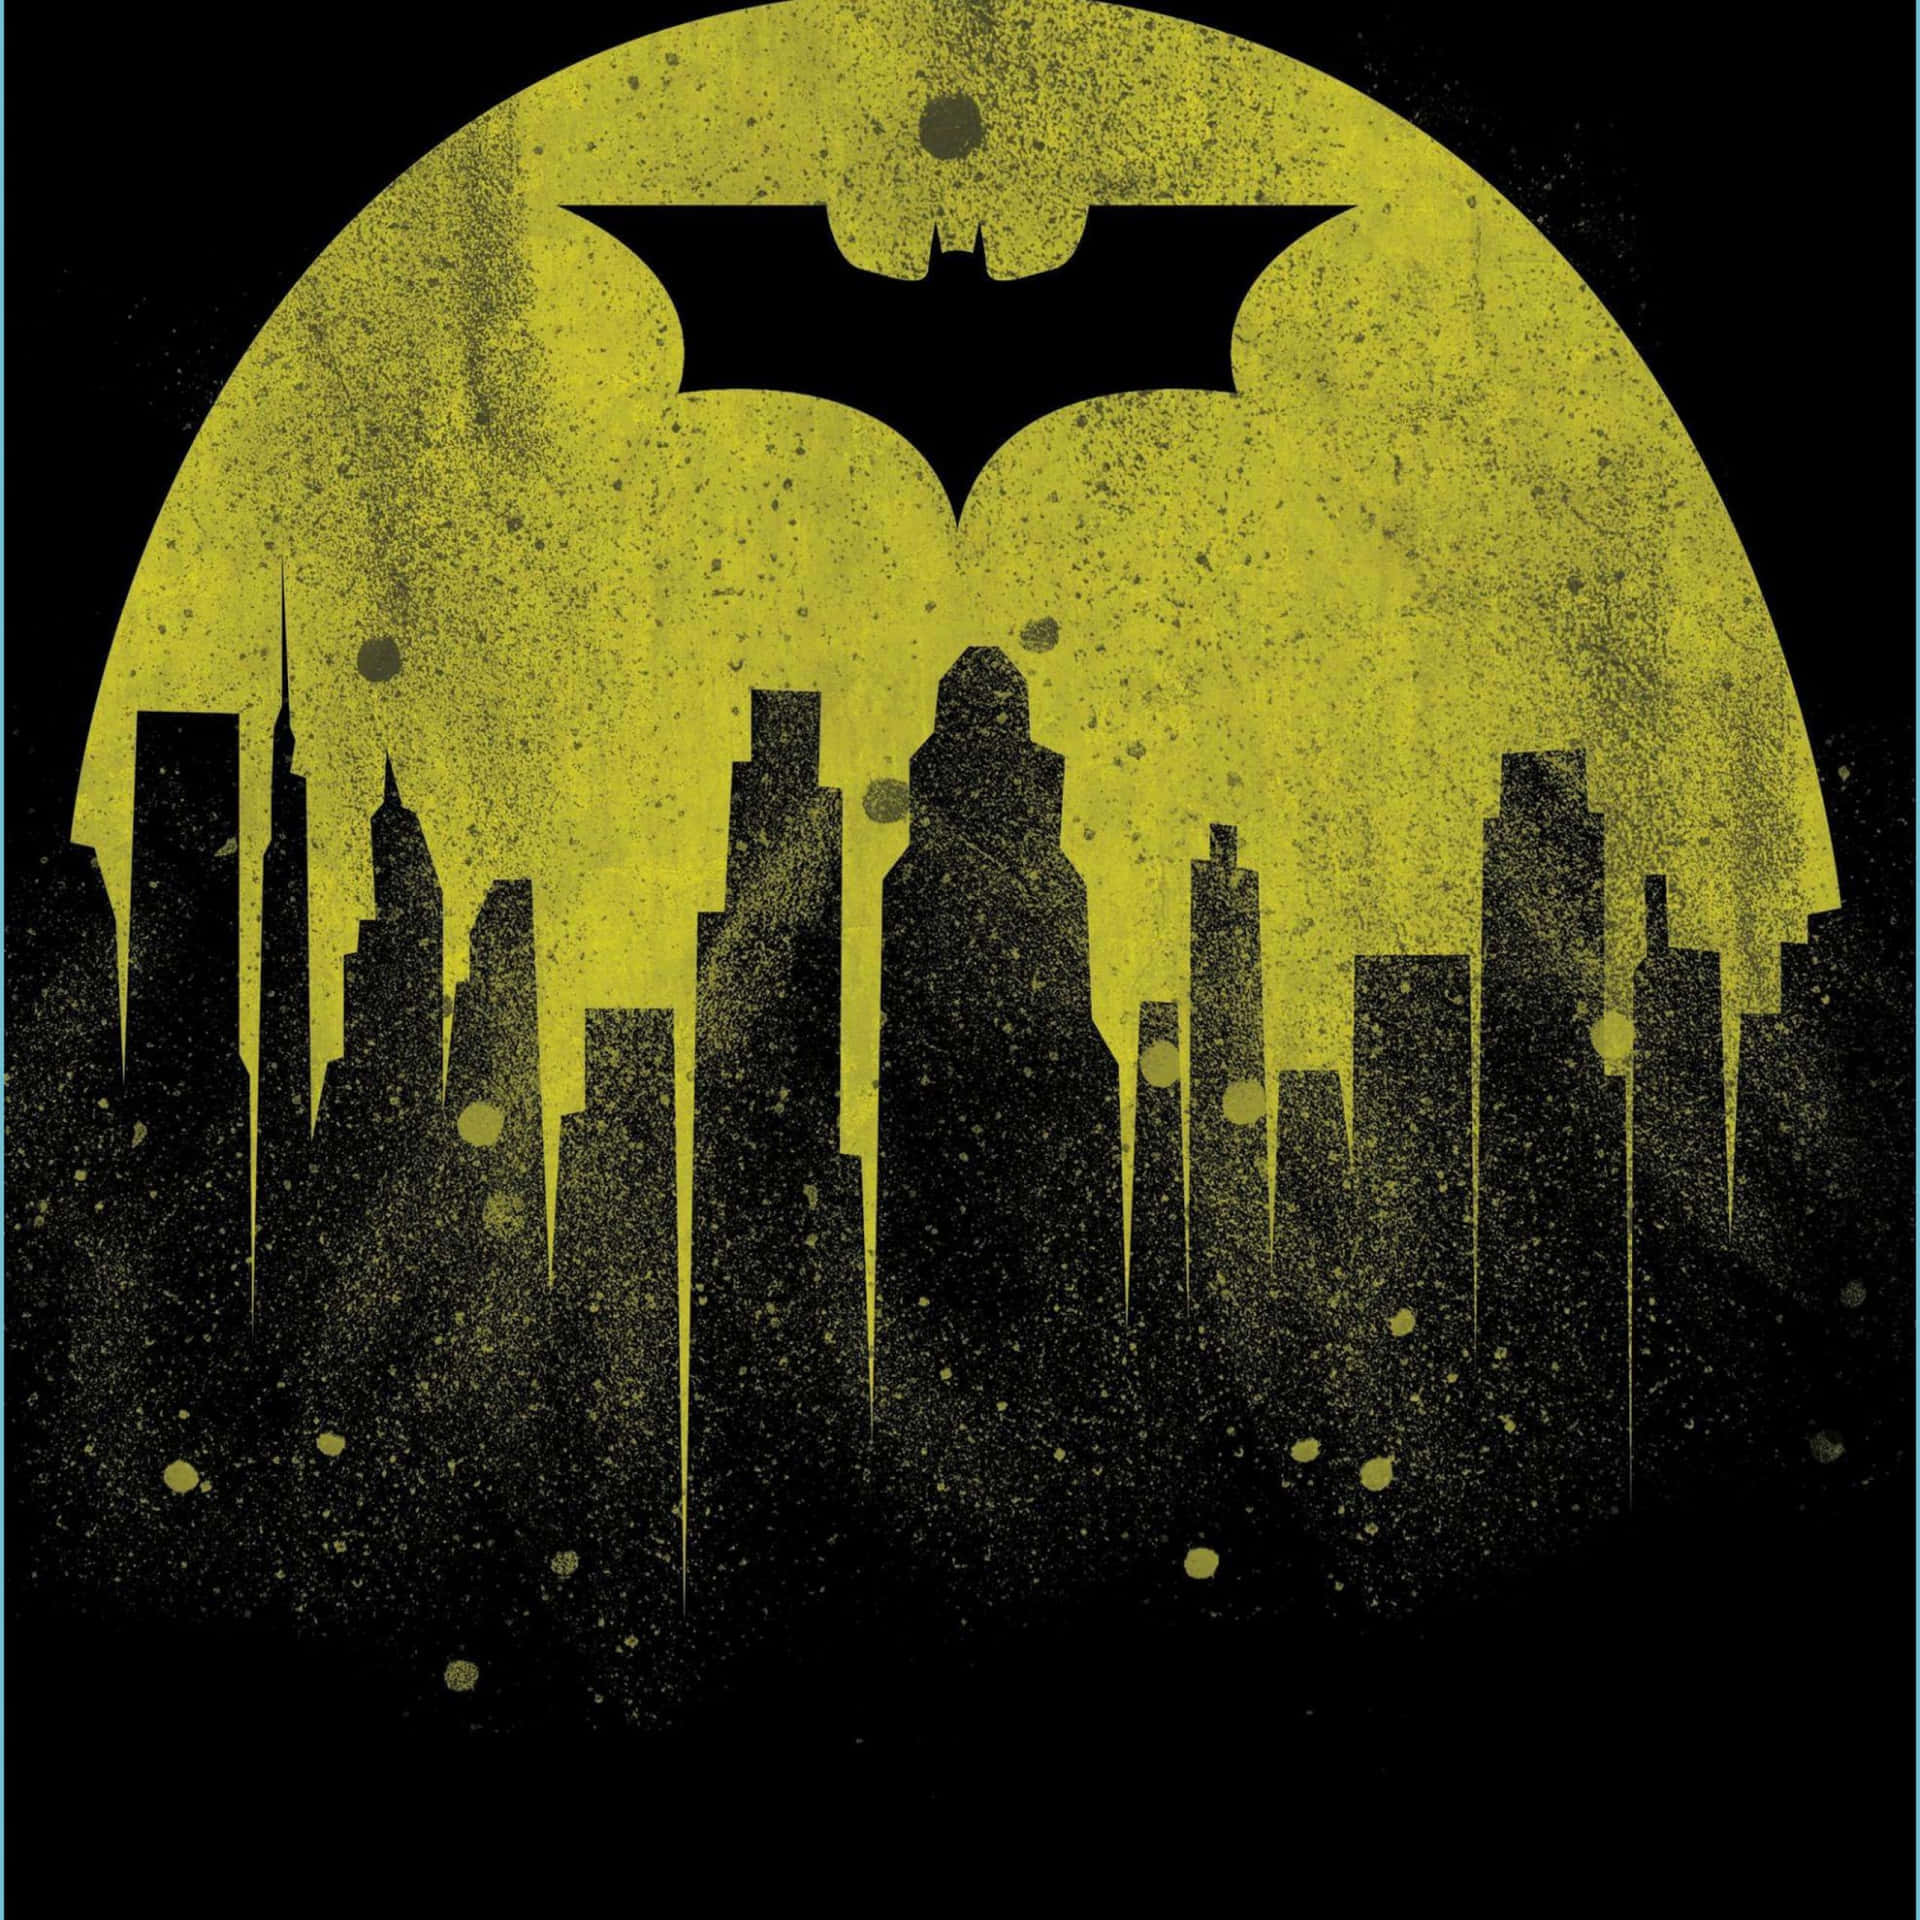 The Dark Knight rises Wallpaper